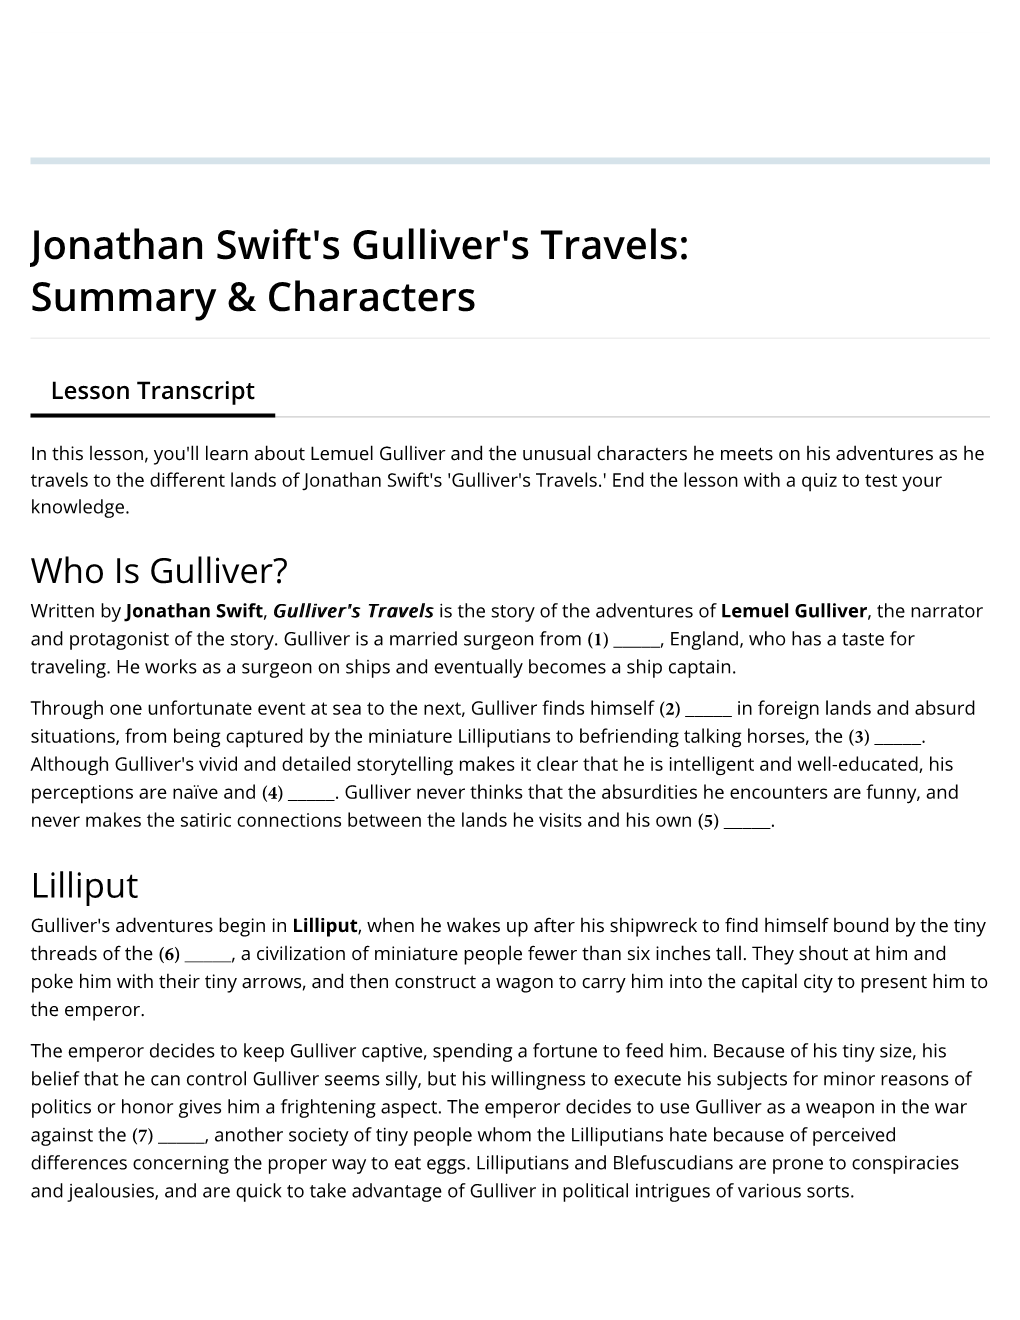 Jonathan Swift's Gulliver's Travels: Summary & Characters